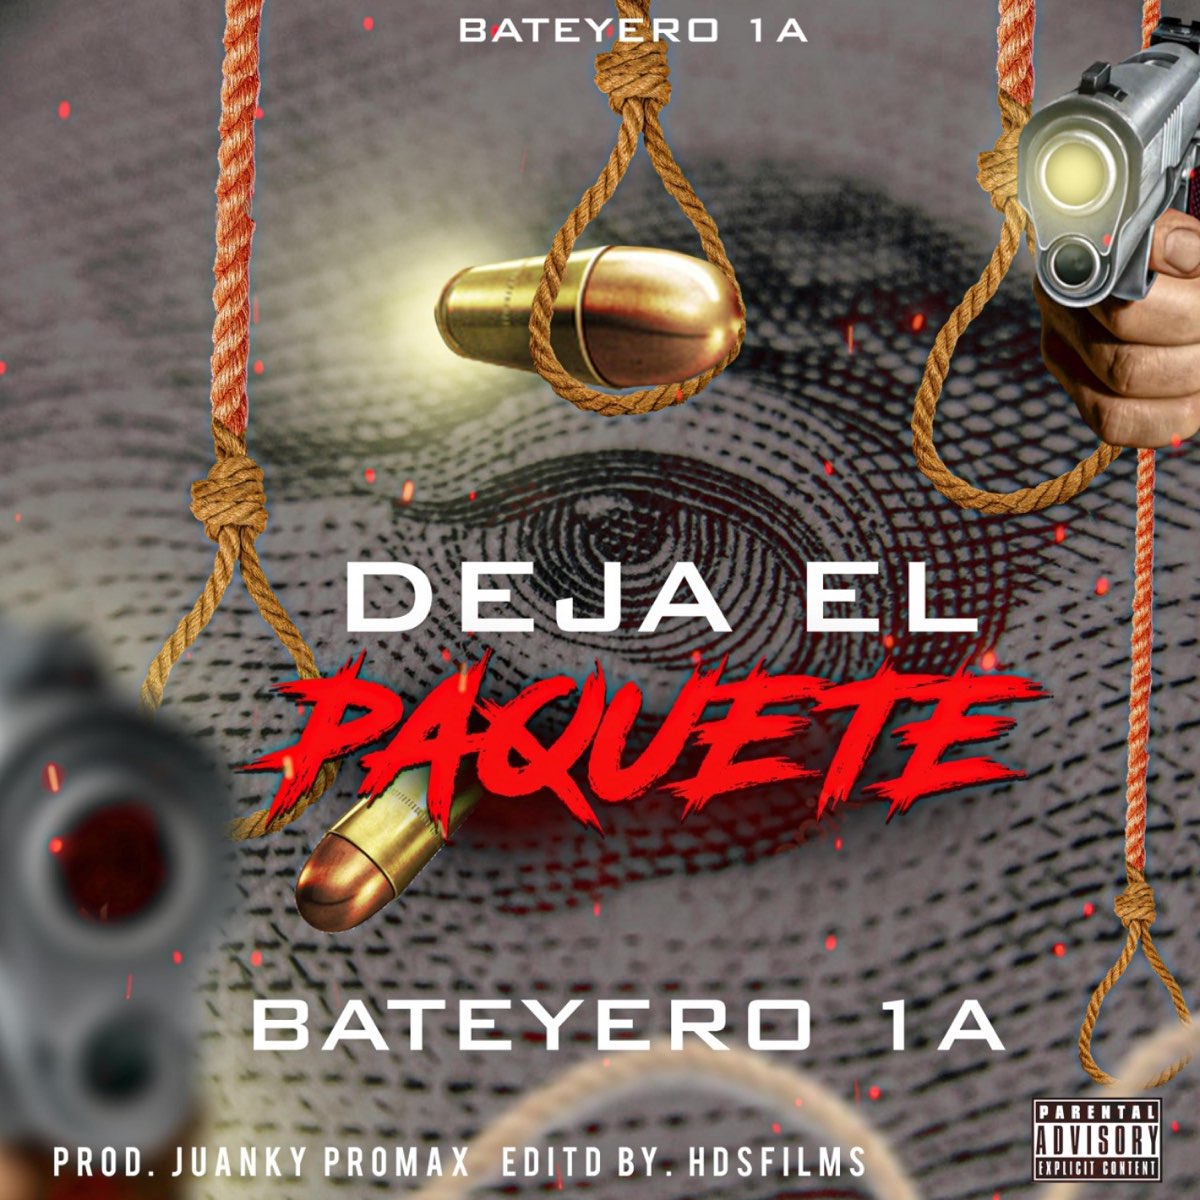 ‎Deja el paquete - Single by Bateyero1a on Apple Music